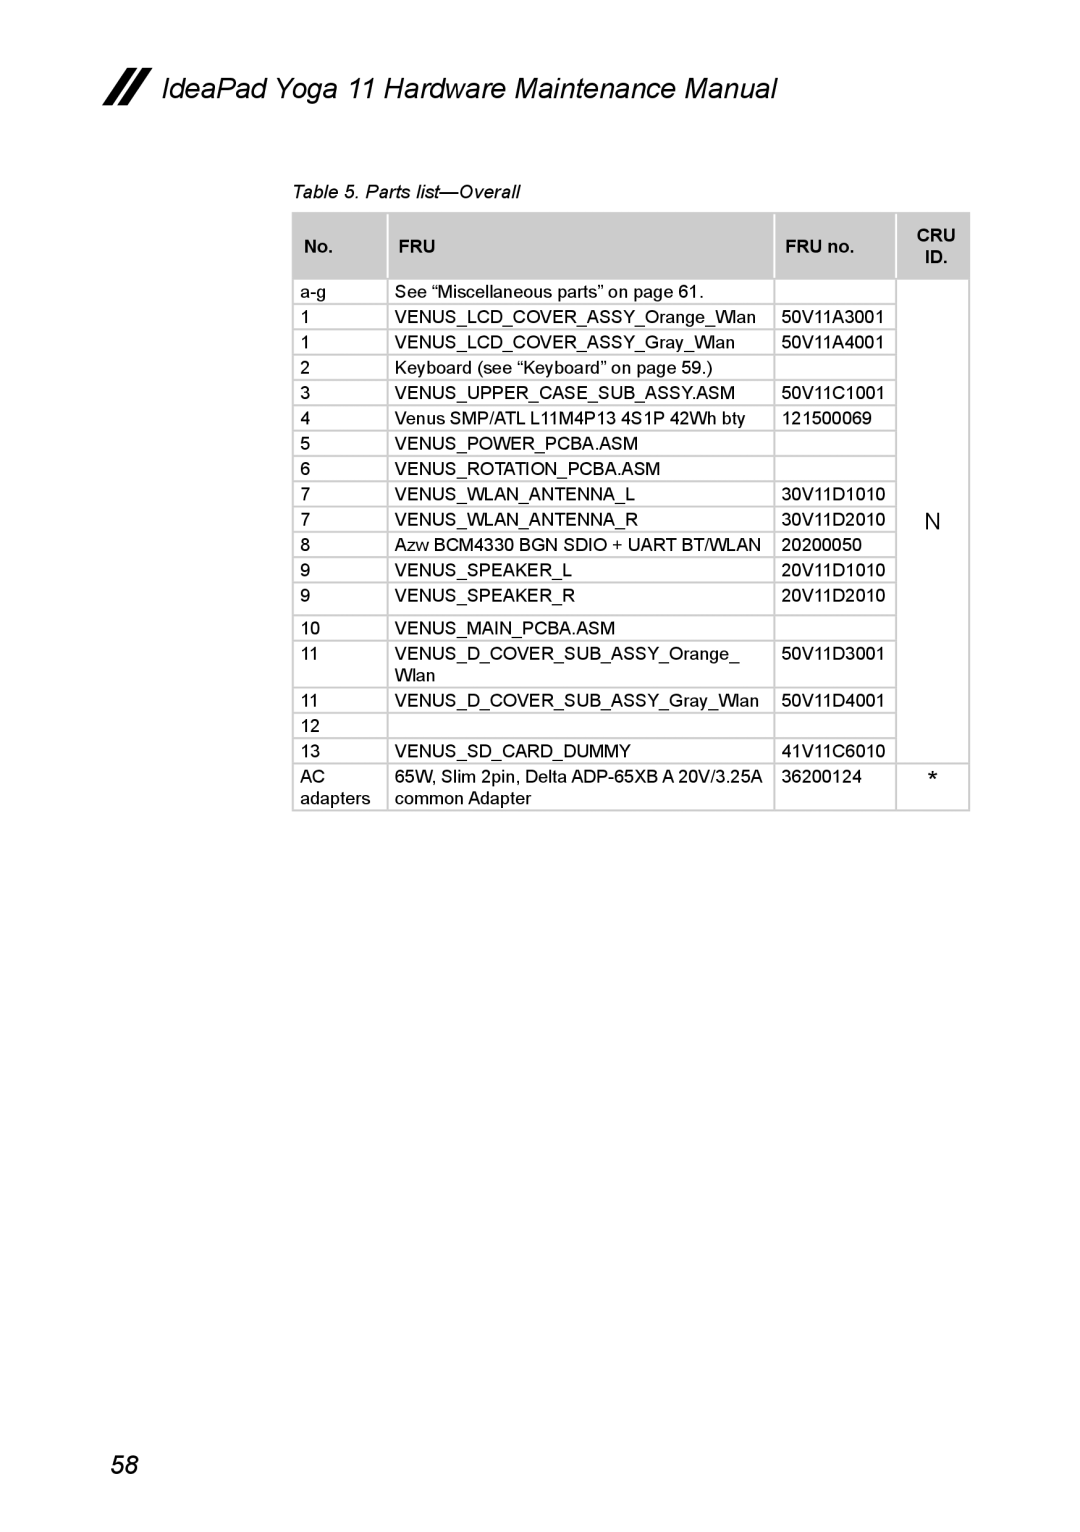 Lenovo manual Parts list-Overall, IdeaPad Yoga 11 Hardware Maintenance Manual, FRU no, Cru Id 